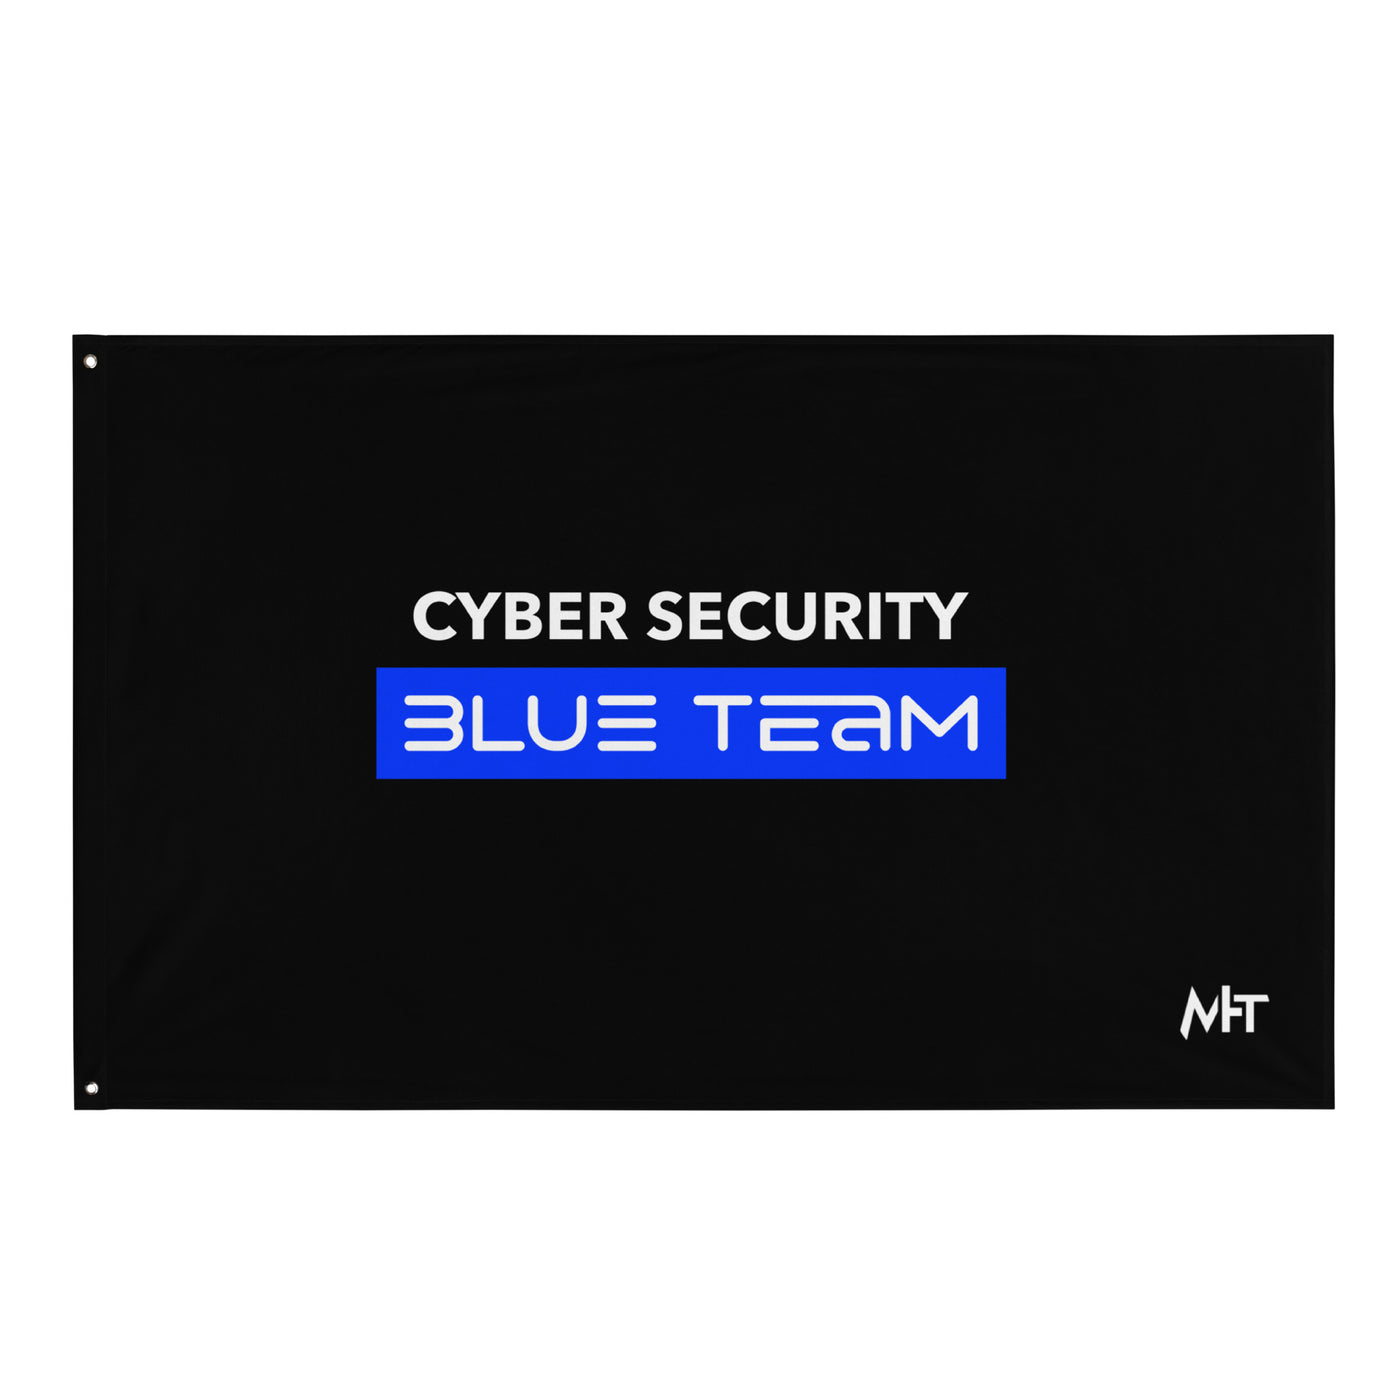 Cyber Security Blue Team V8 - Flag